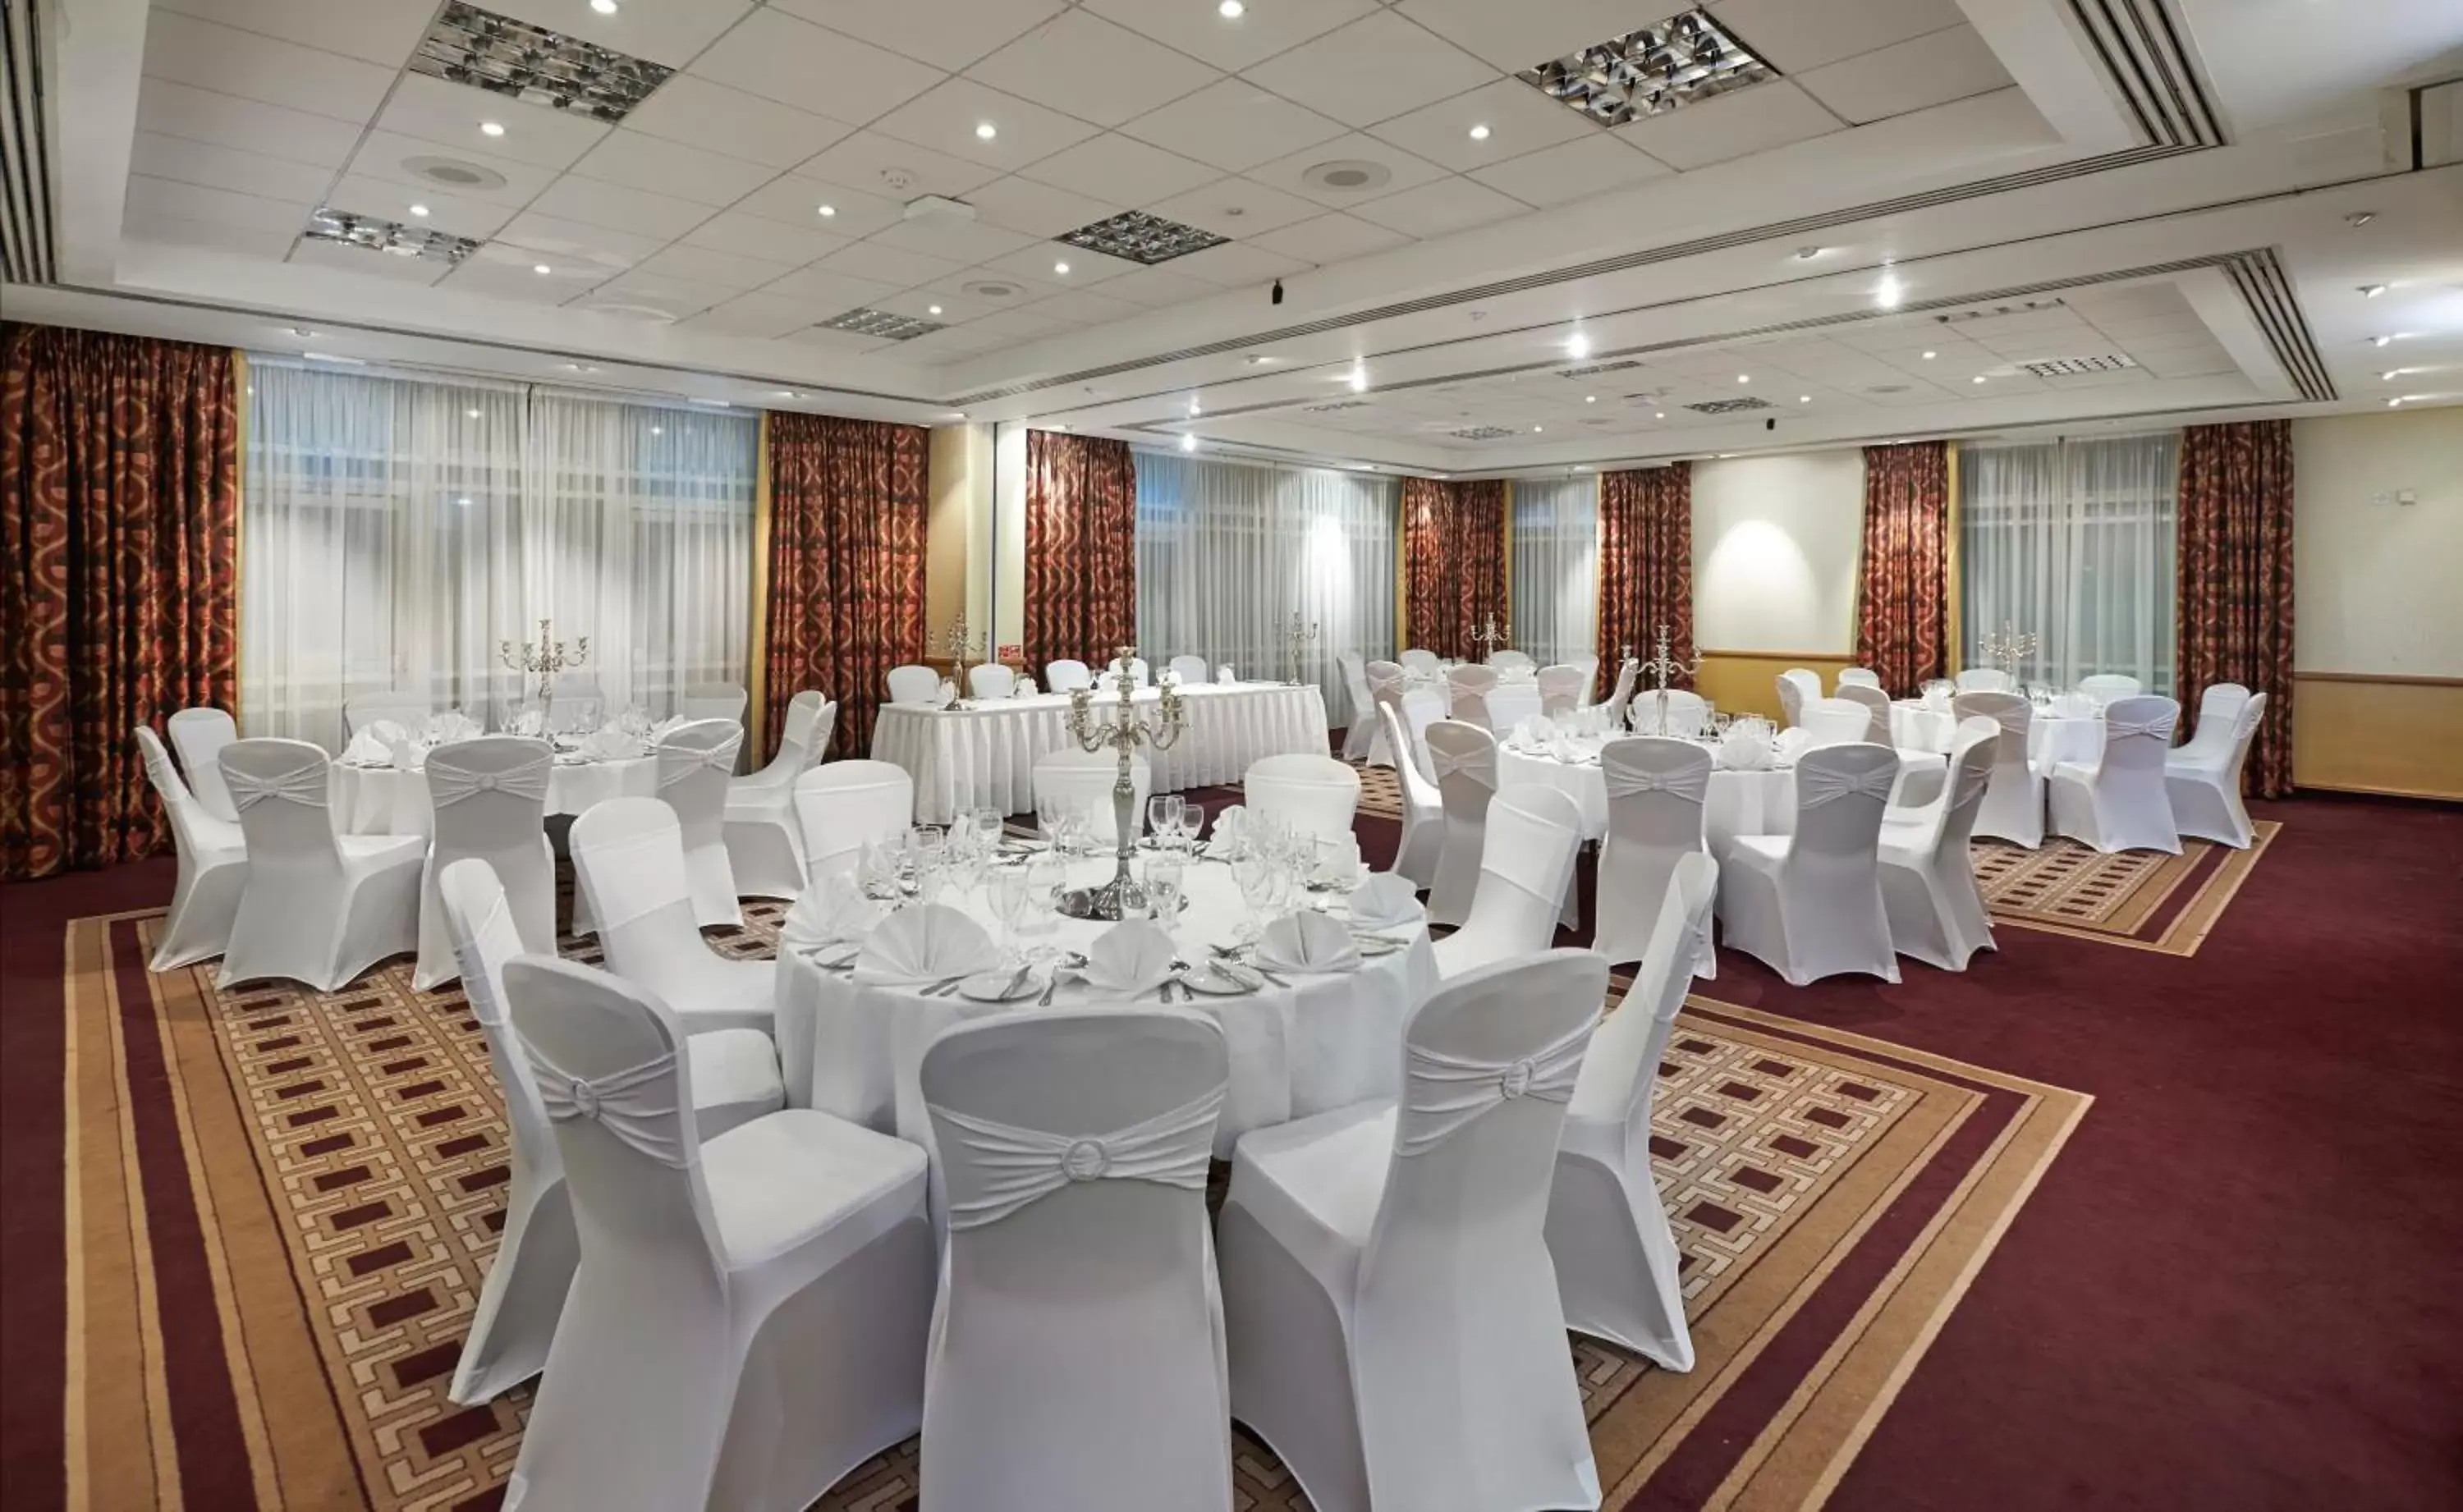 Area and facilities, Banquet Facilities in Orida Maidstone